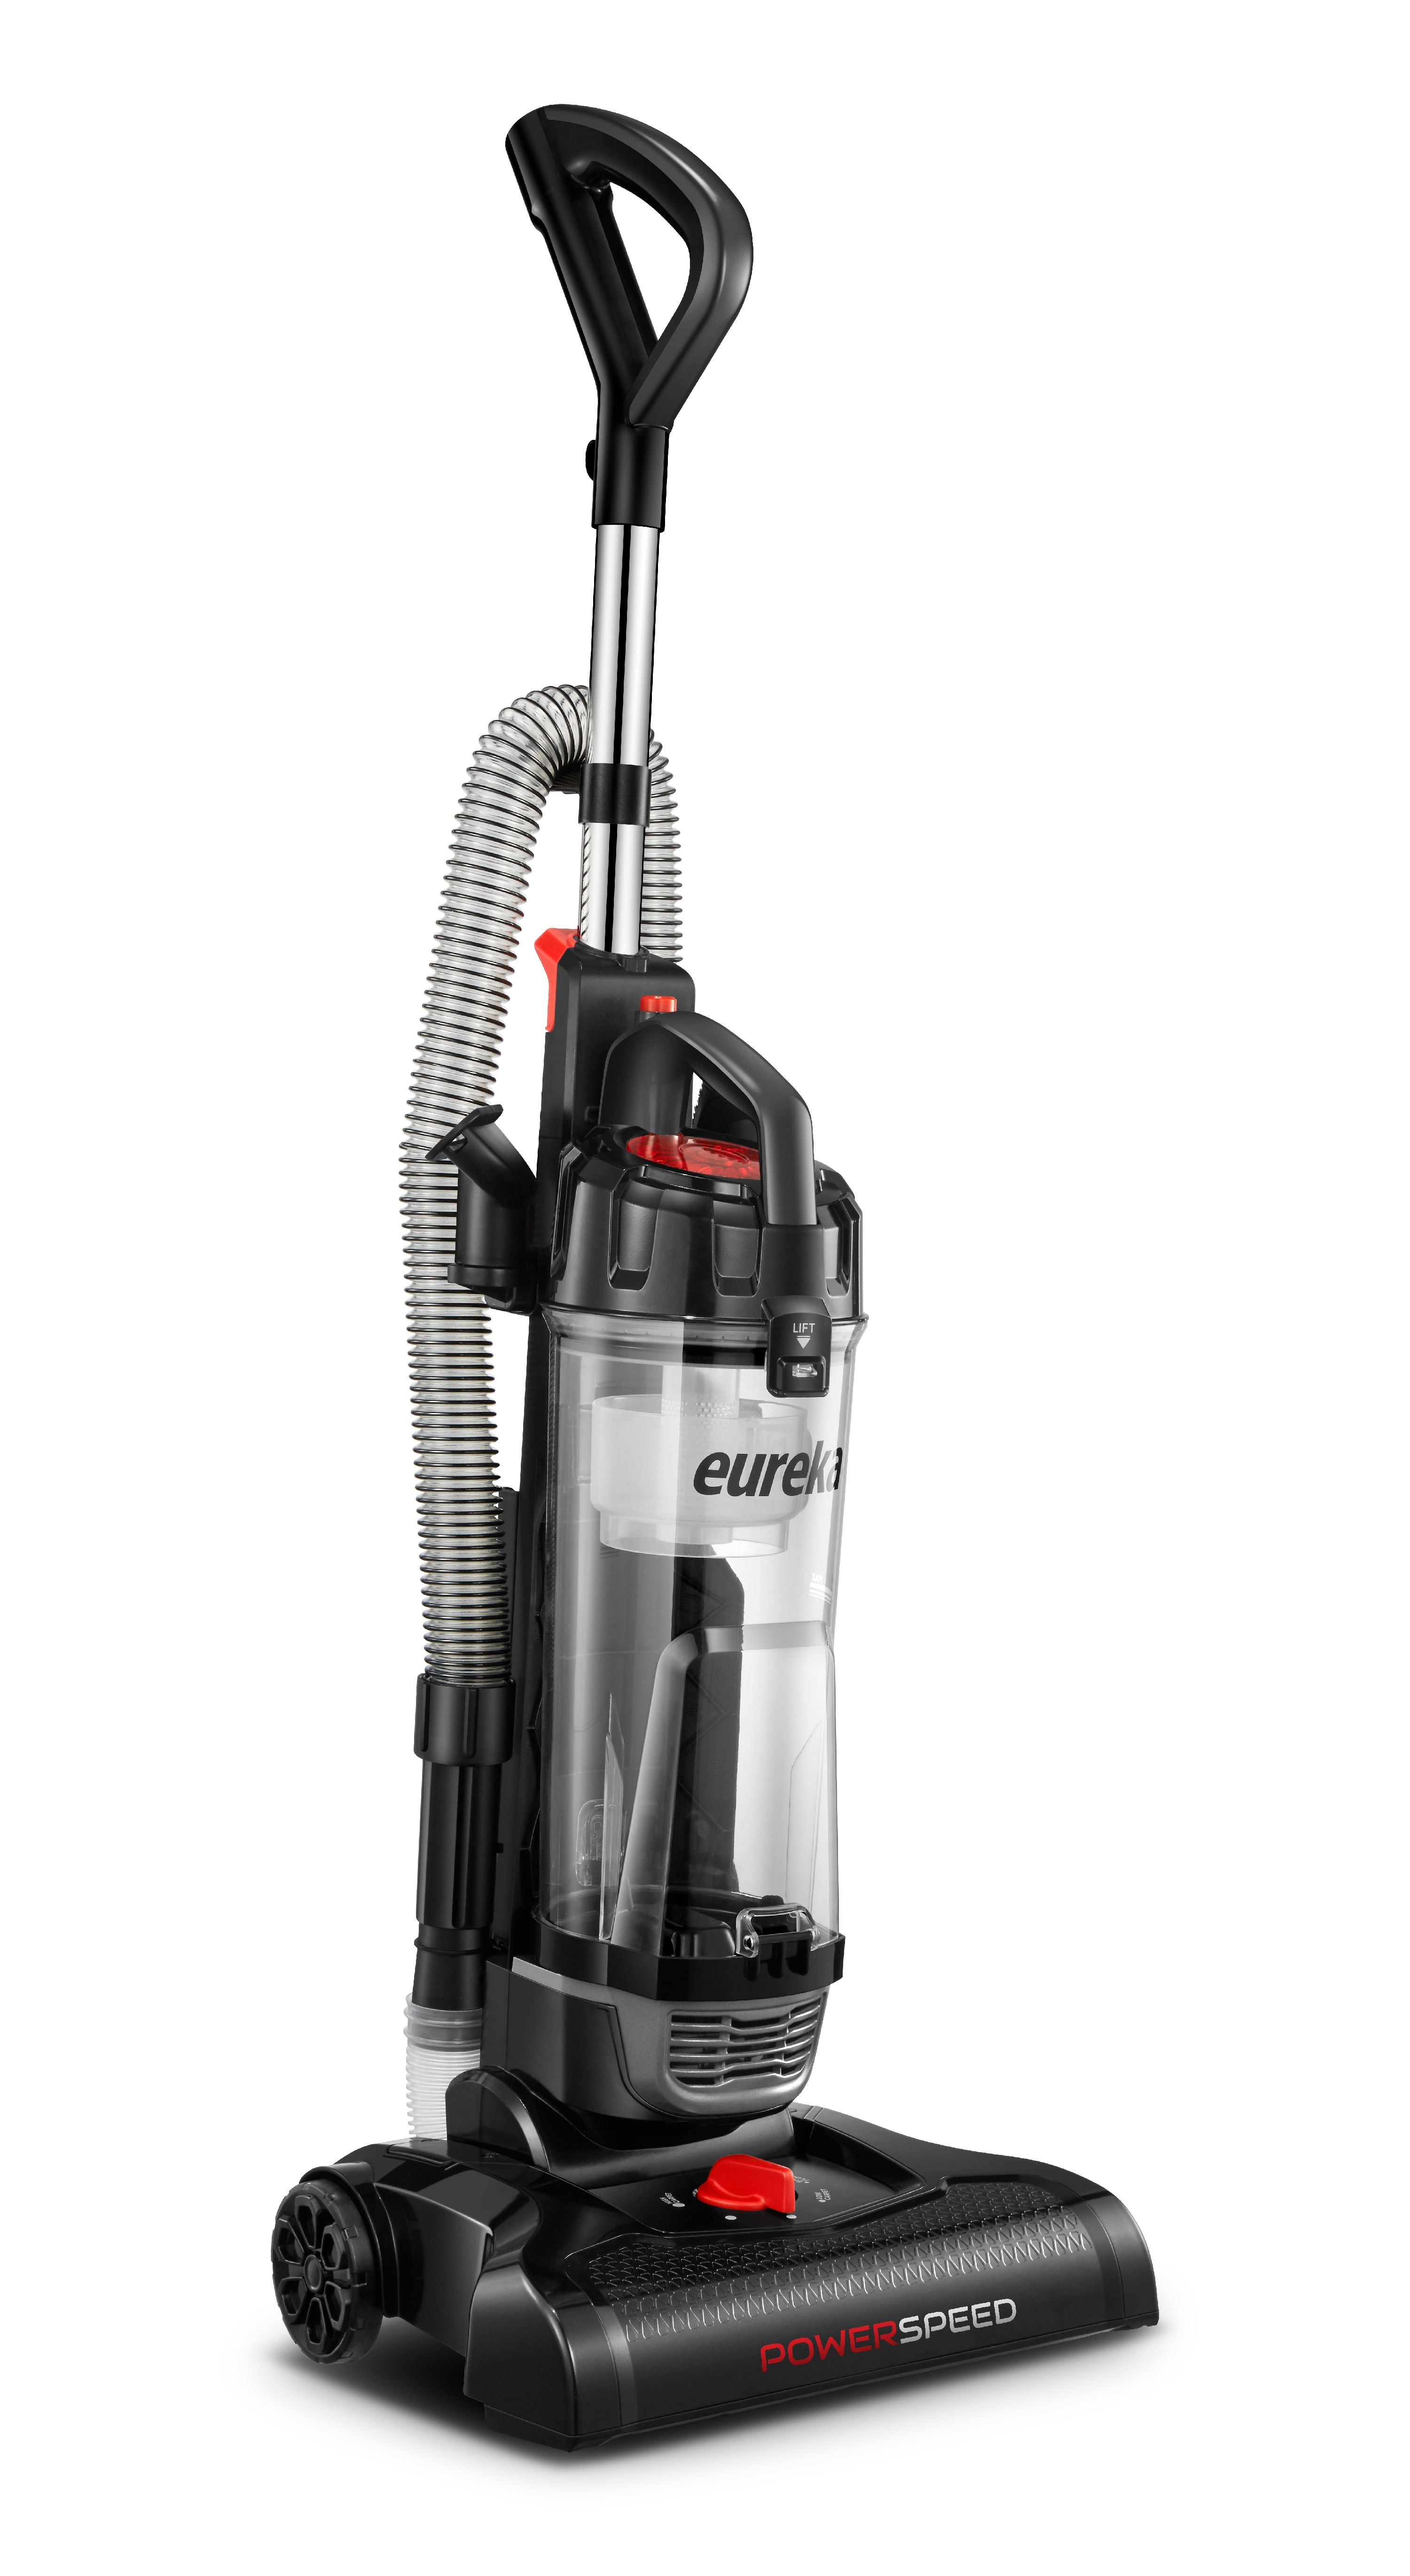 Eureka Power Speed Multi-Surface Lightweight Upright Vacuum, NEU180